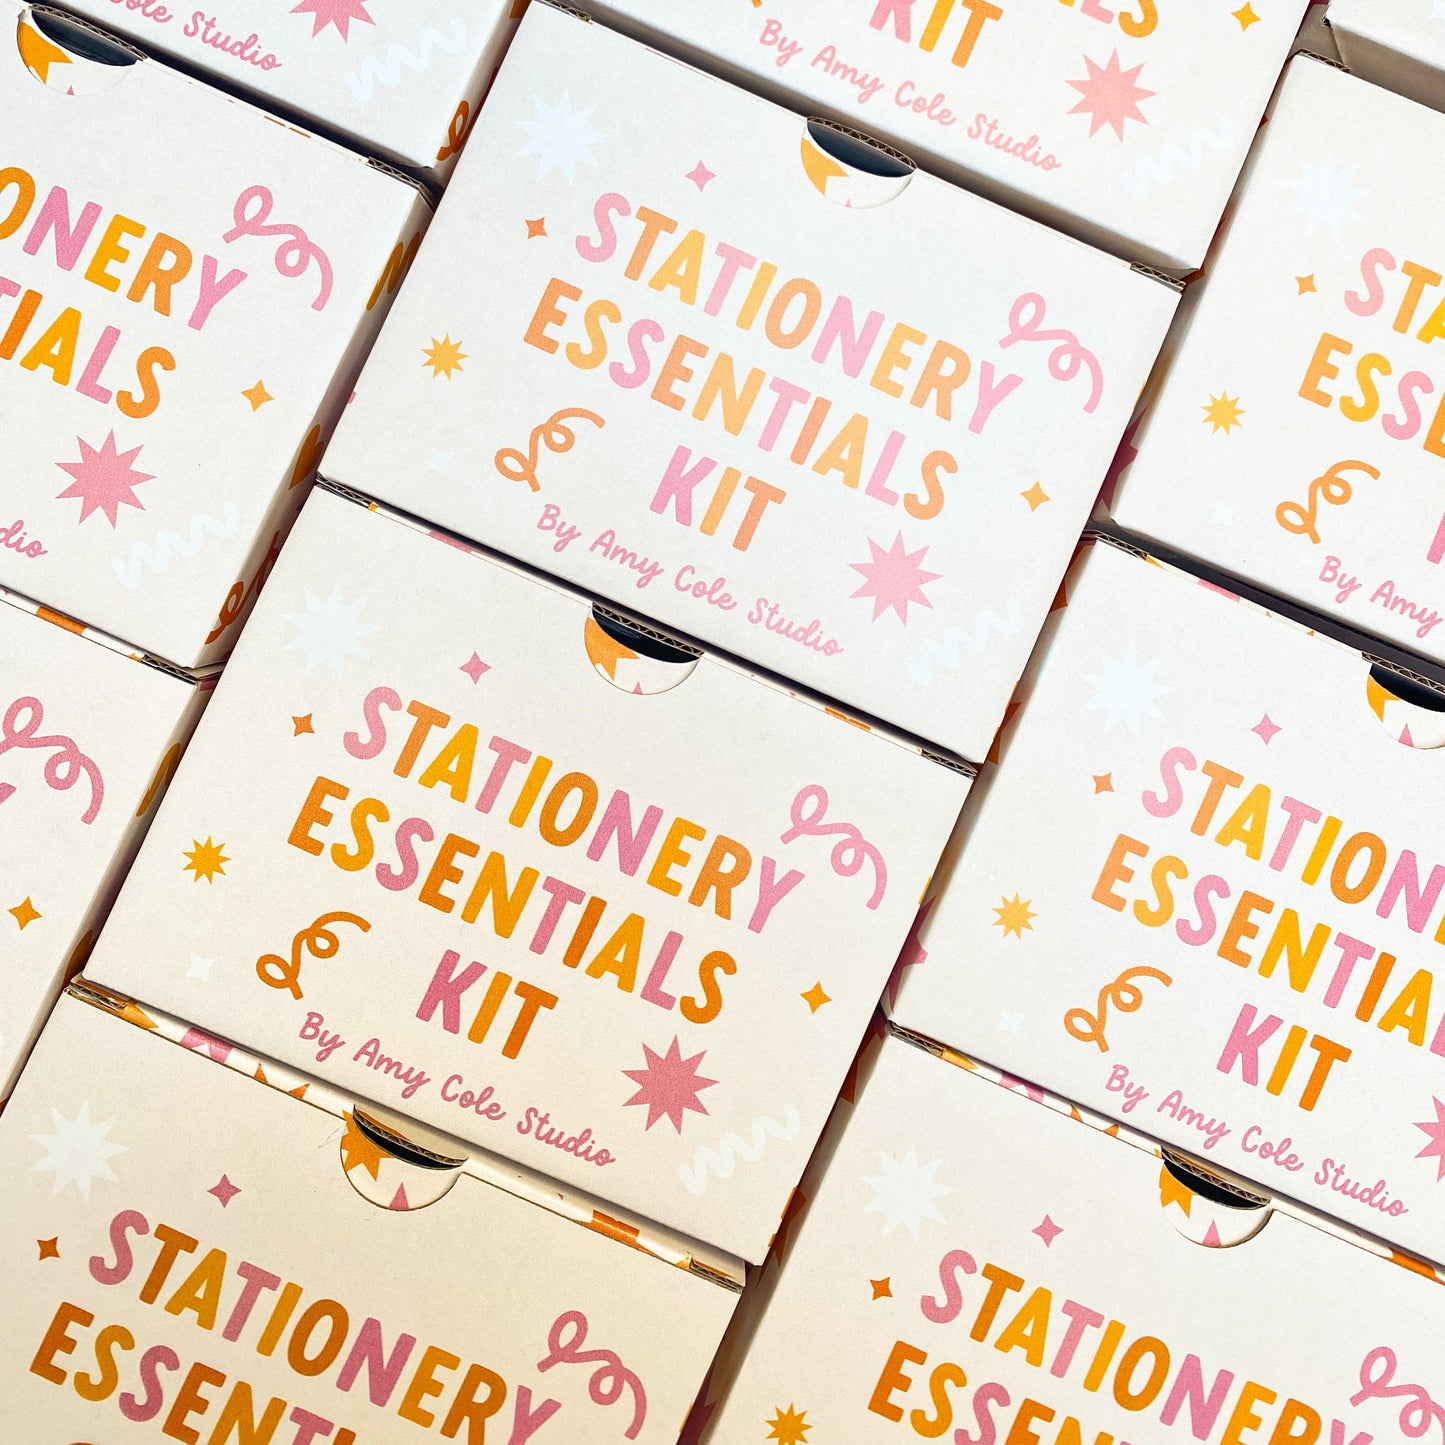 Stationery Essentials Kit